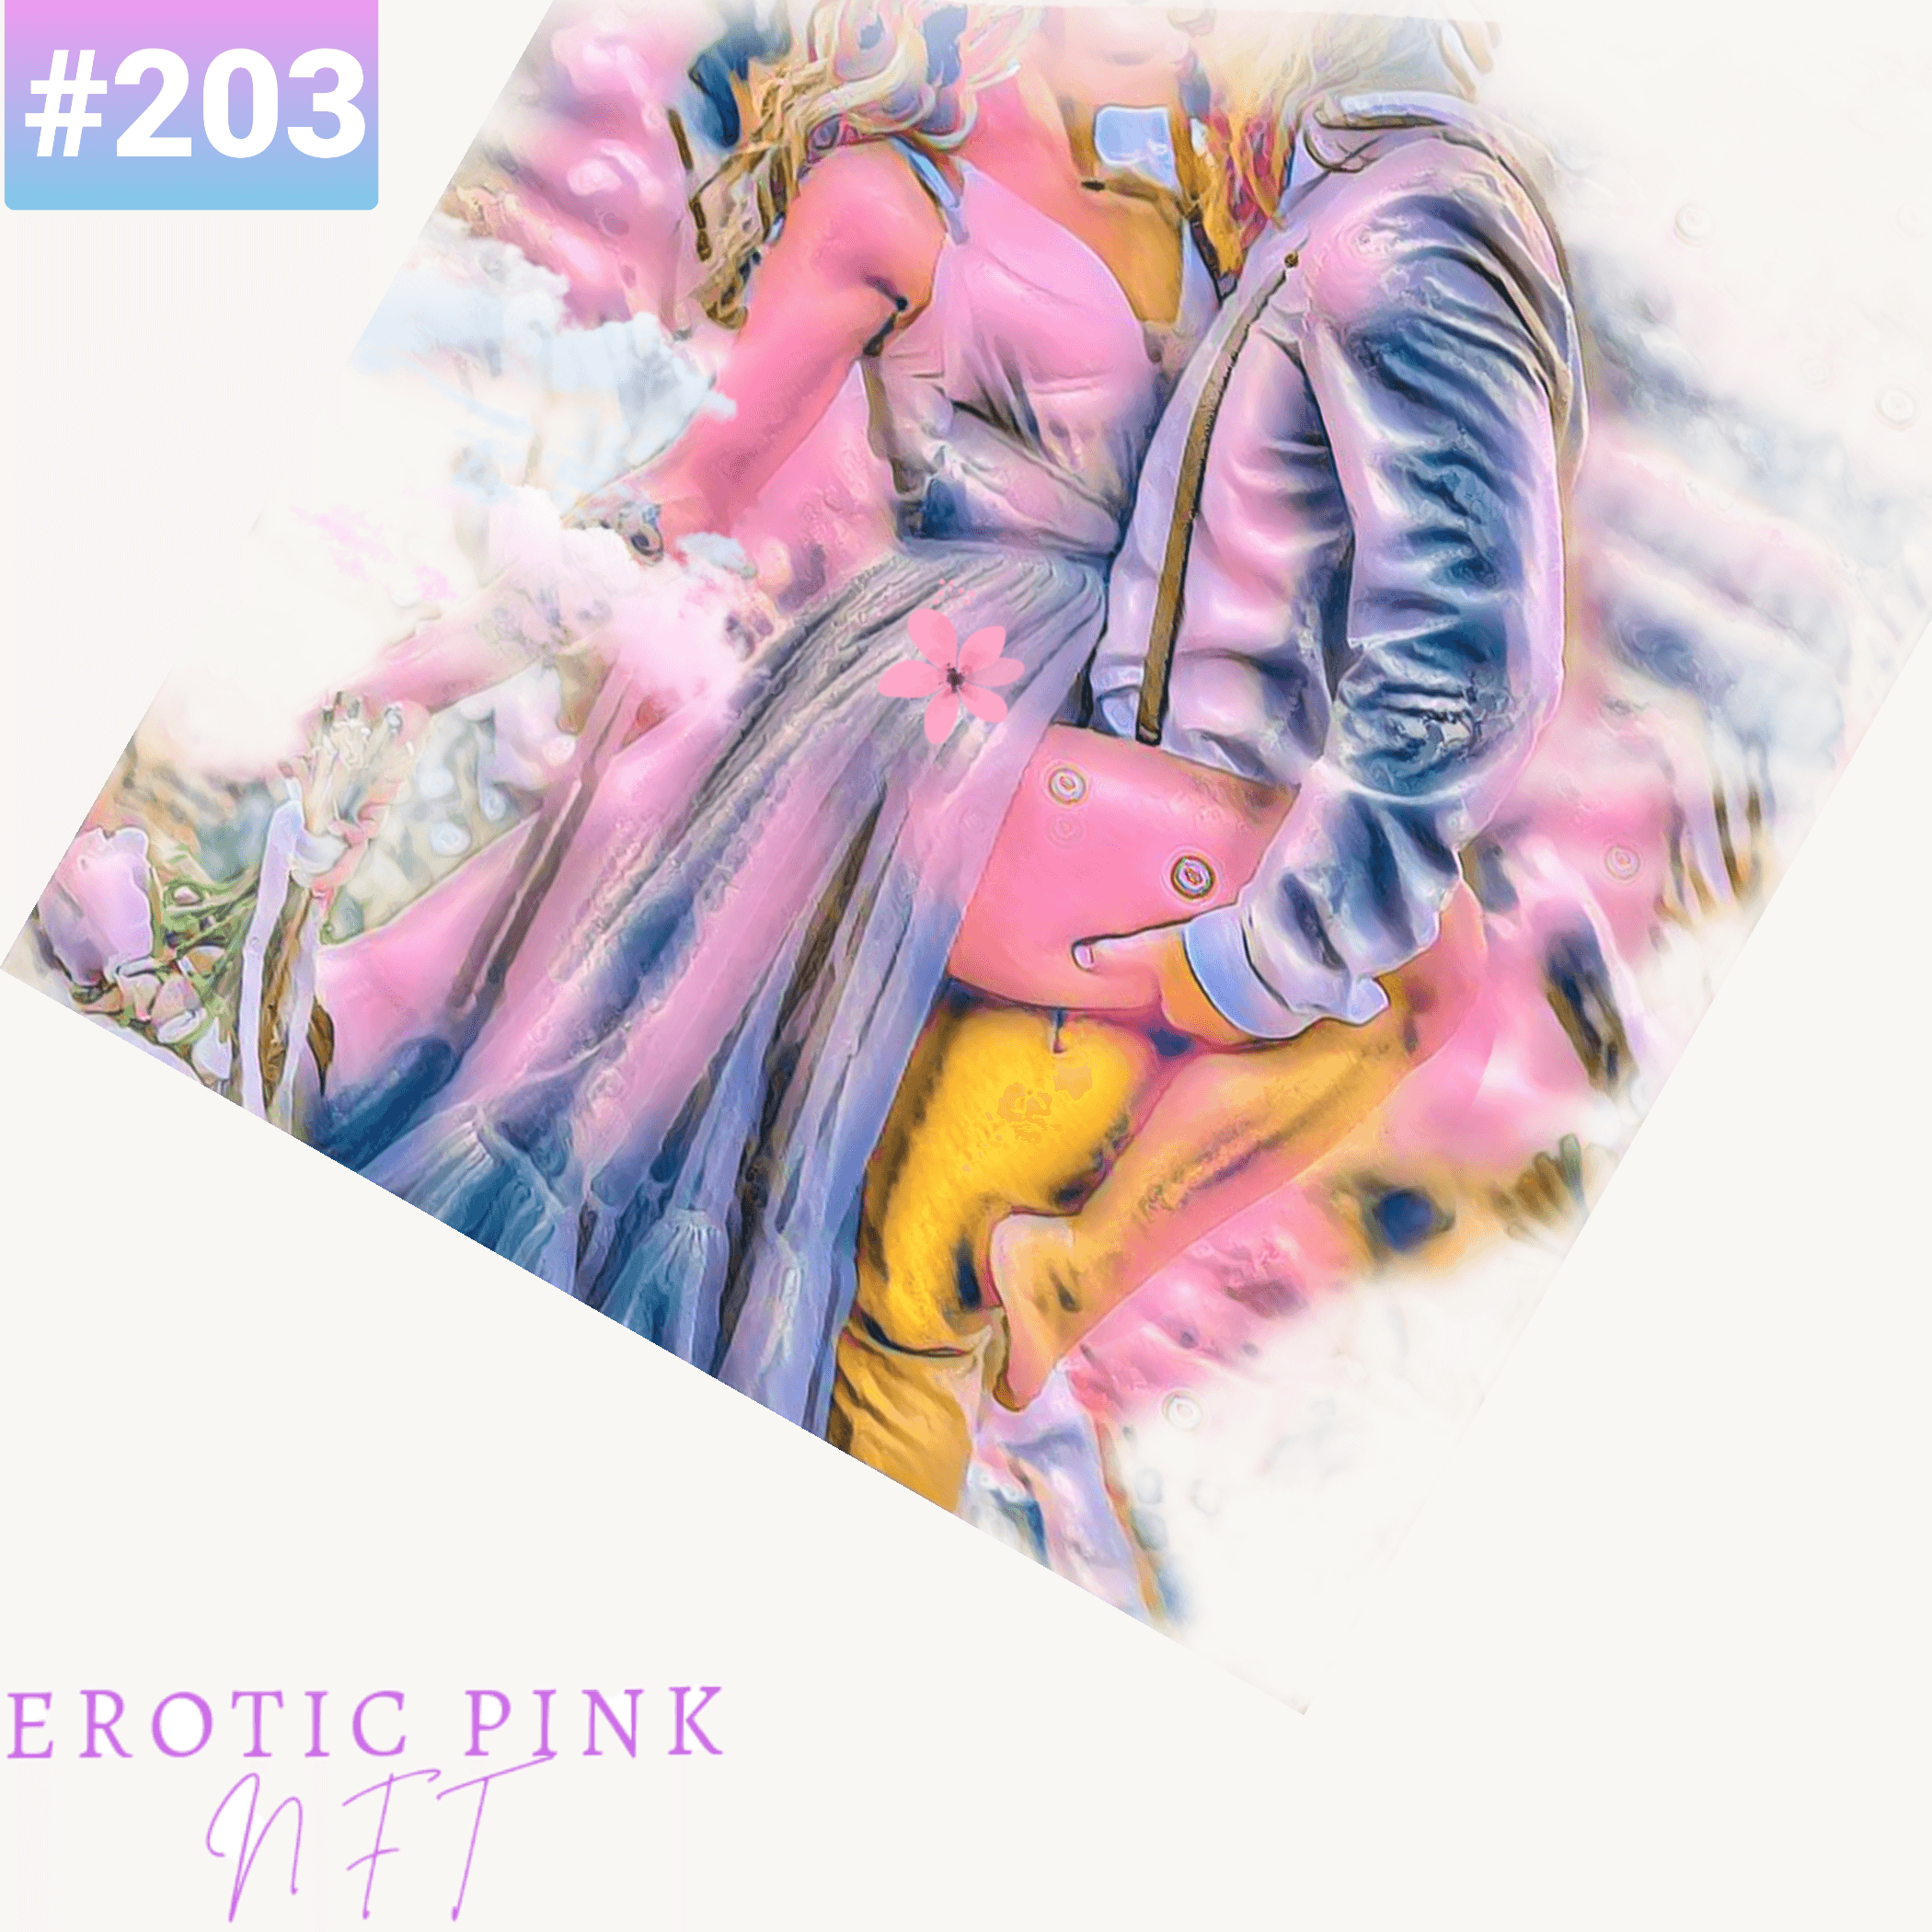 Erotic Pink #203